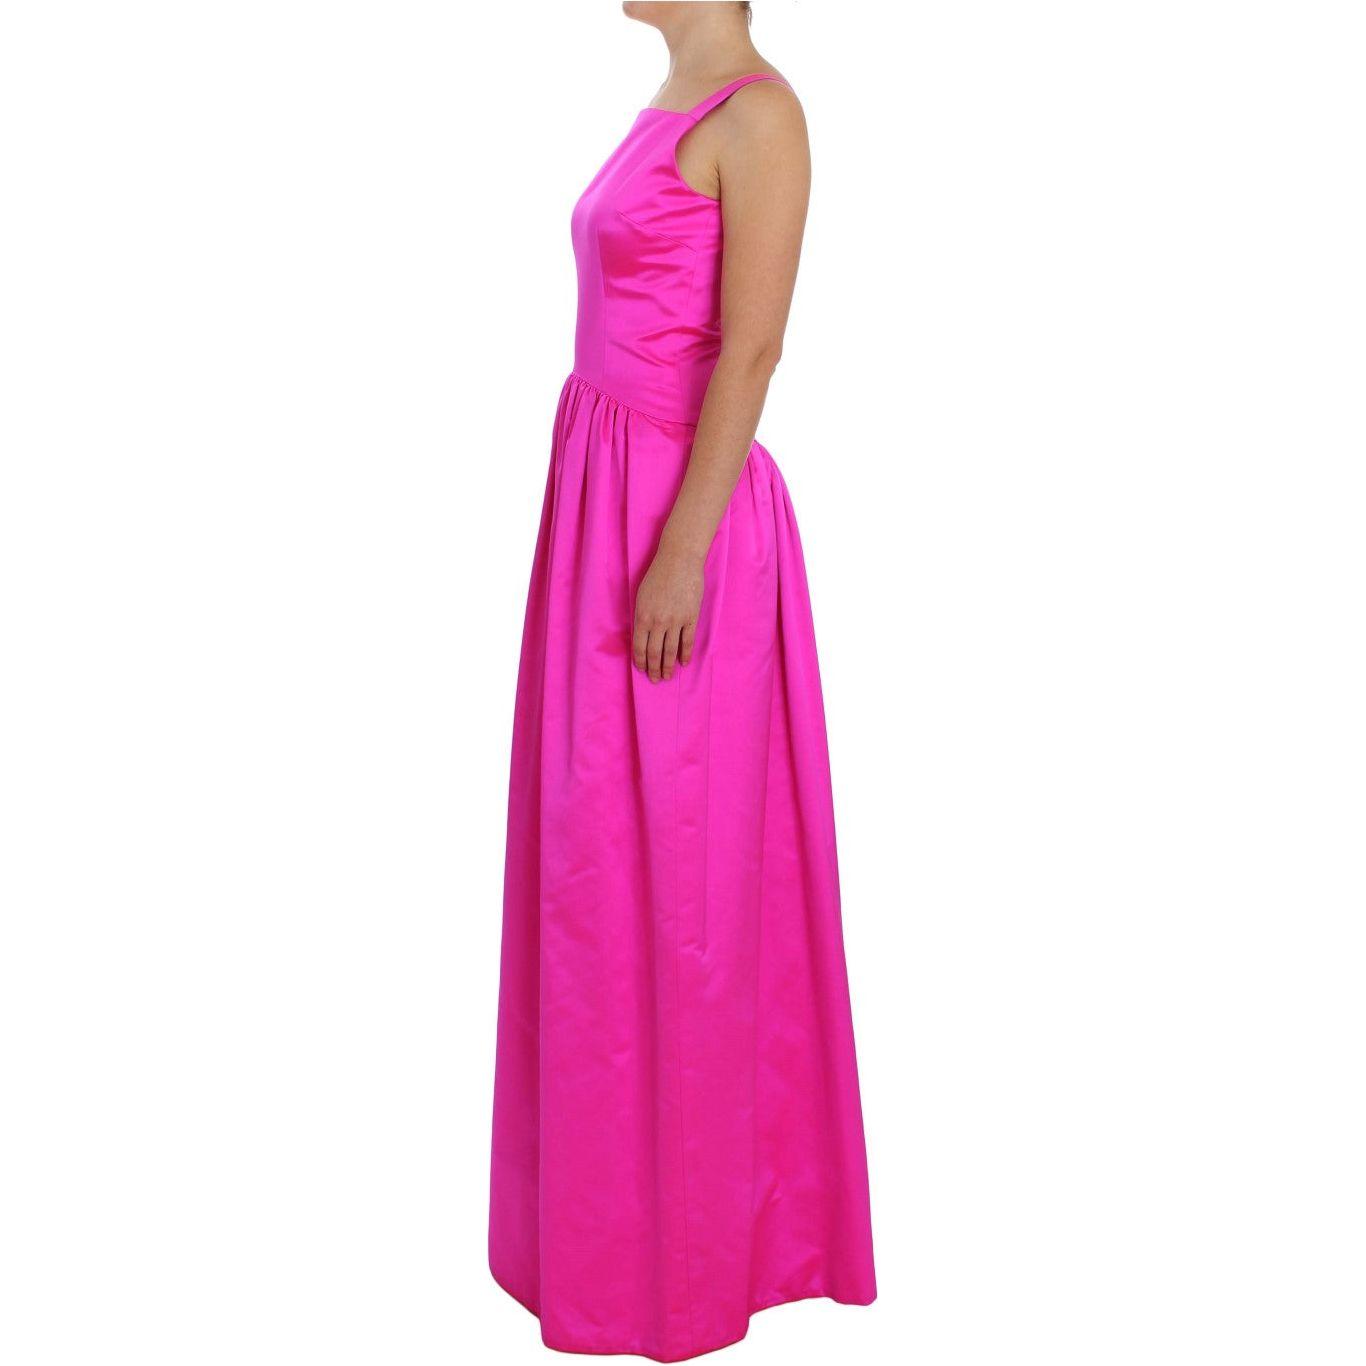 Dolce & Gabbana Elegant Silk Full Length Pink Sheath Dress pink-silk-long-sheath-ball-gown-dress 76495-pink-silk-long-sheath-ball-gown-dress-1.jpg